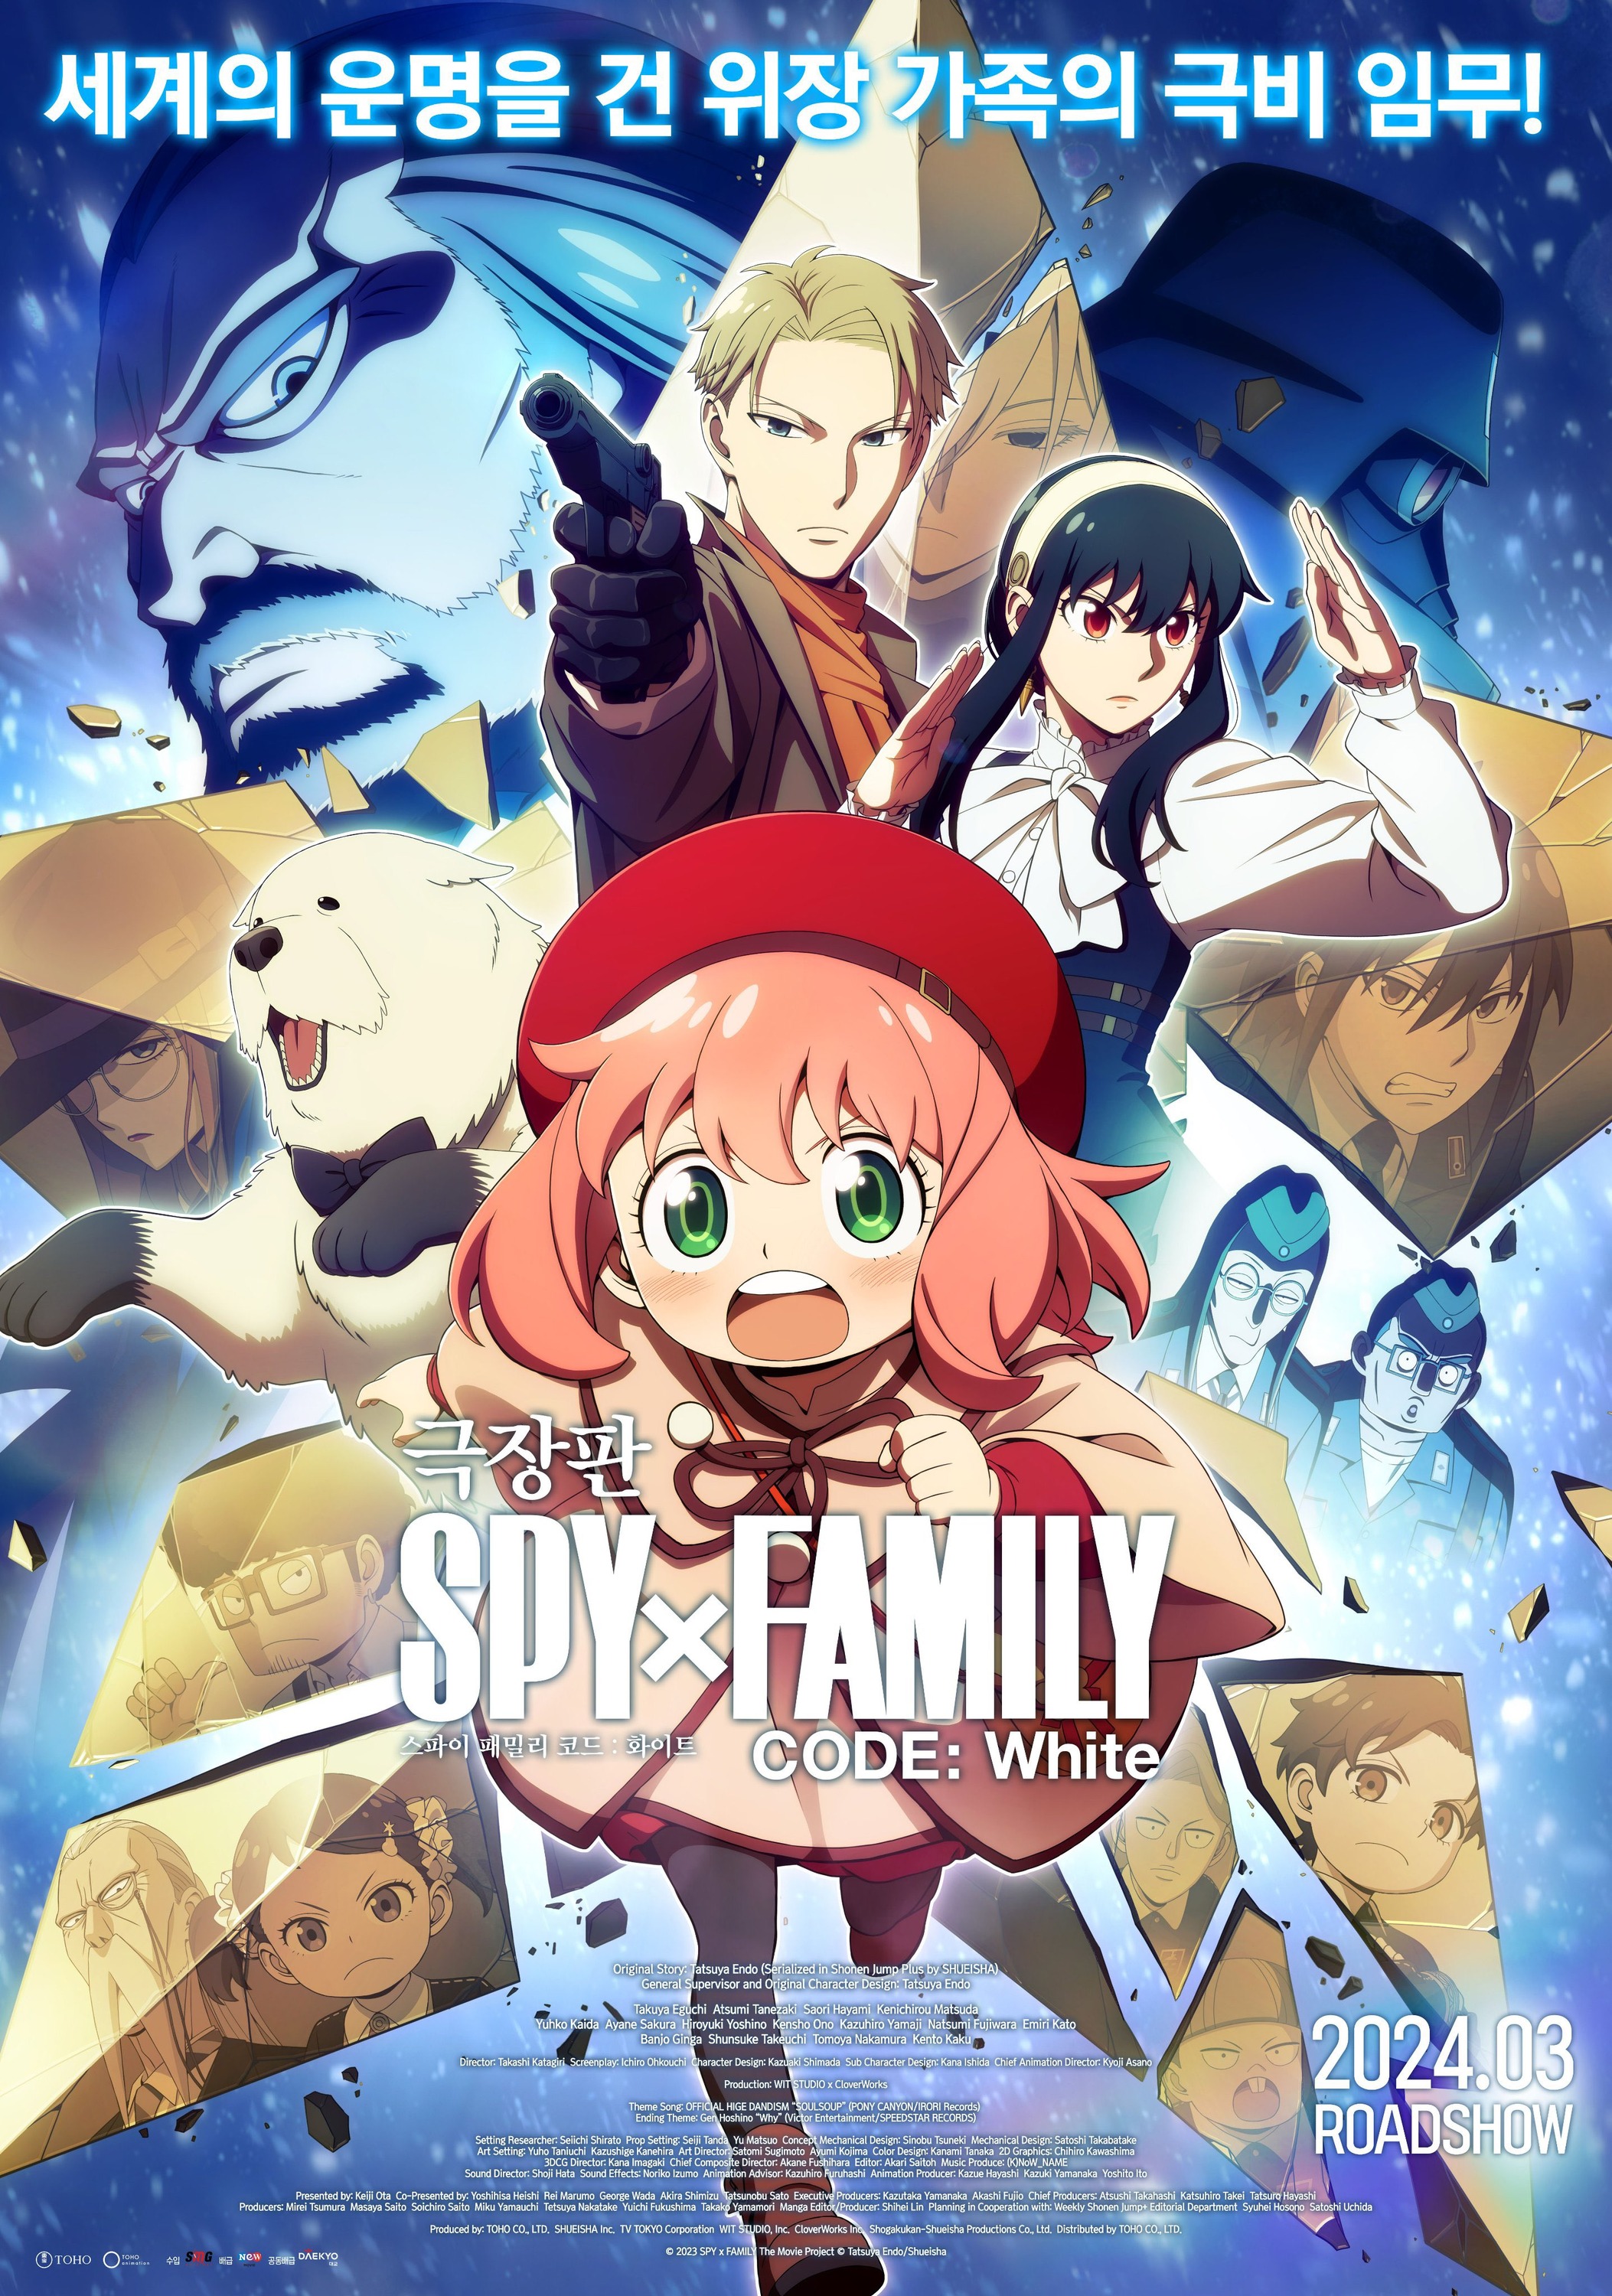 Mega Sized Movie Poster Image for Gekijoban Spy x Family Code: White (#3 of 4)